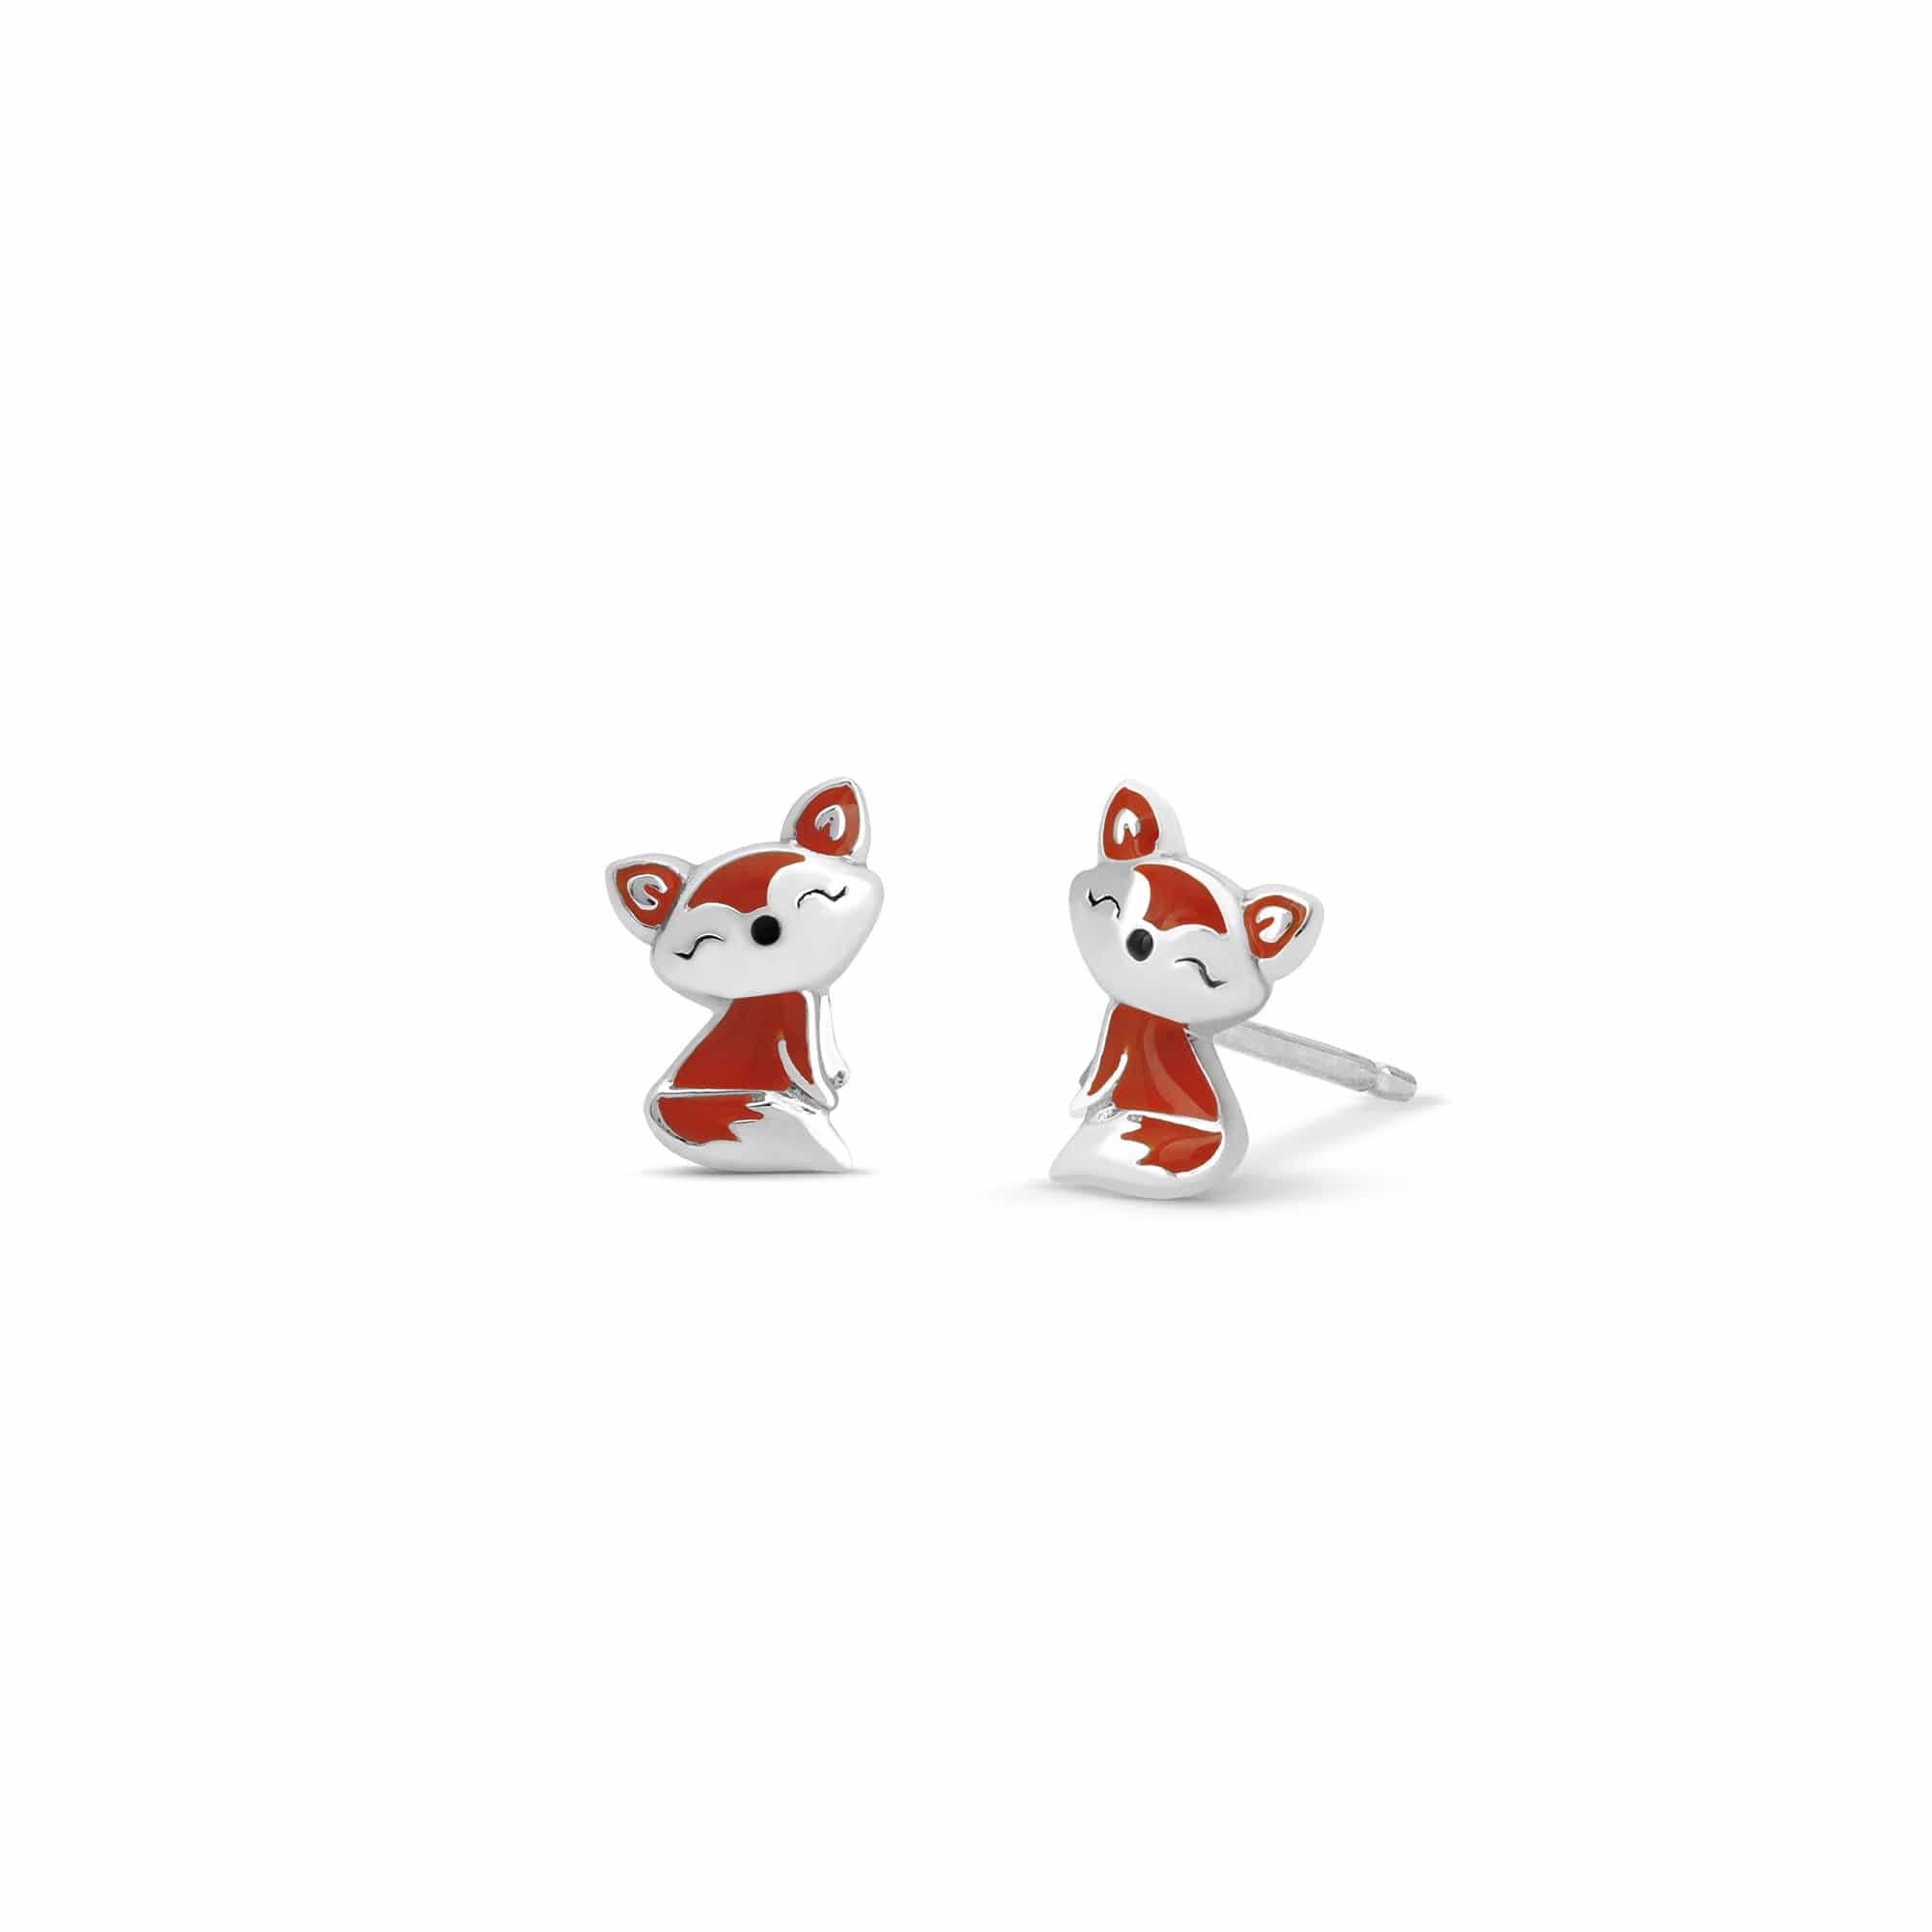 Boma Jewelry Earrings Cute Cartoon Fox Studs